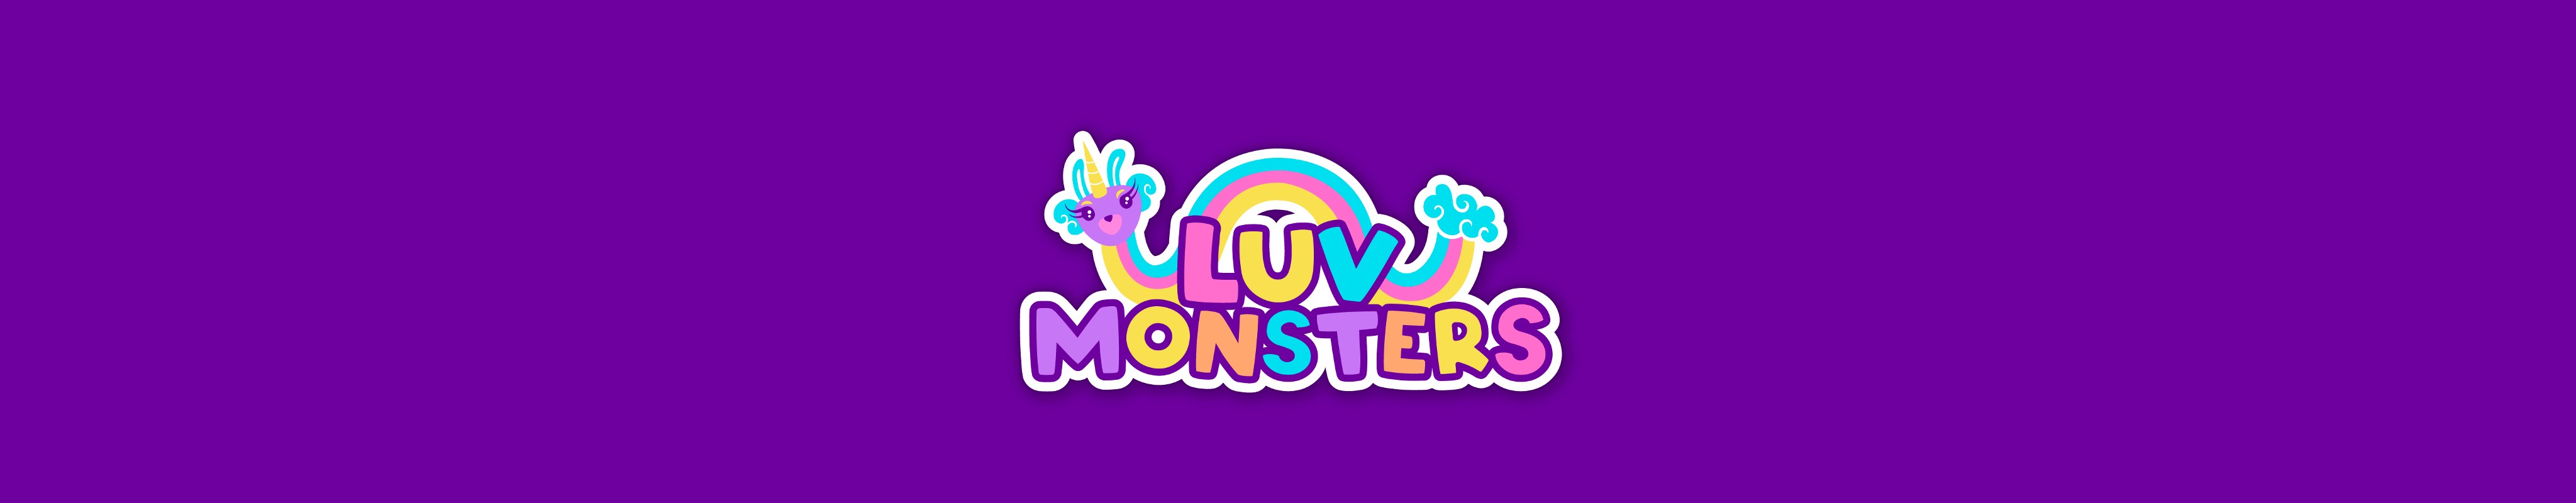 LuvMonsters - Animals of Joy